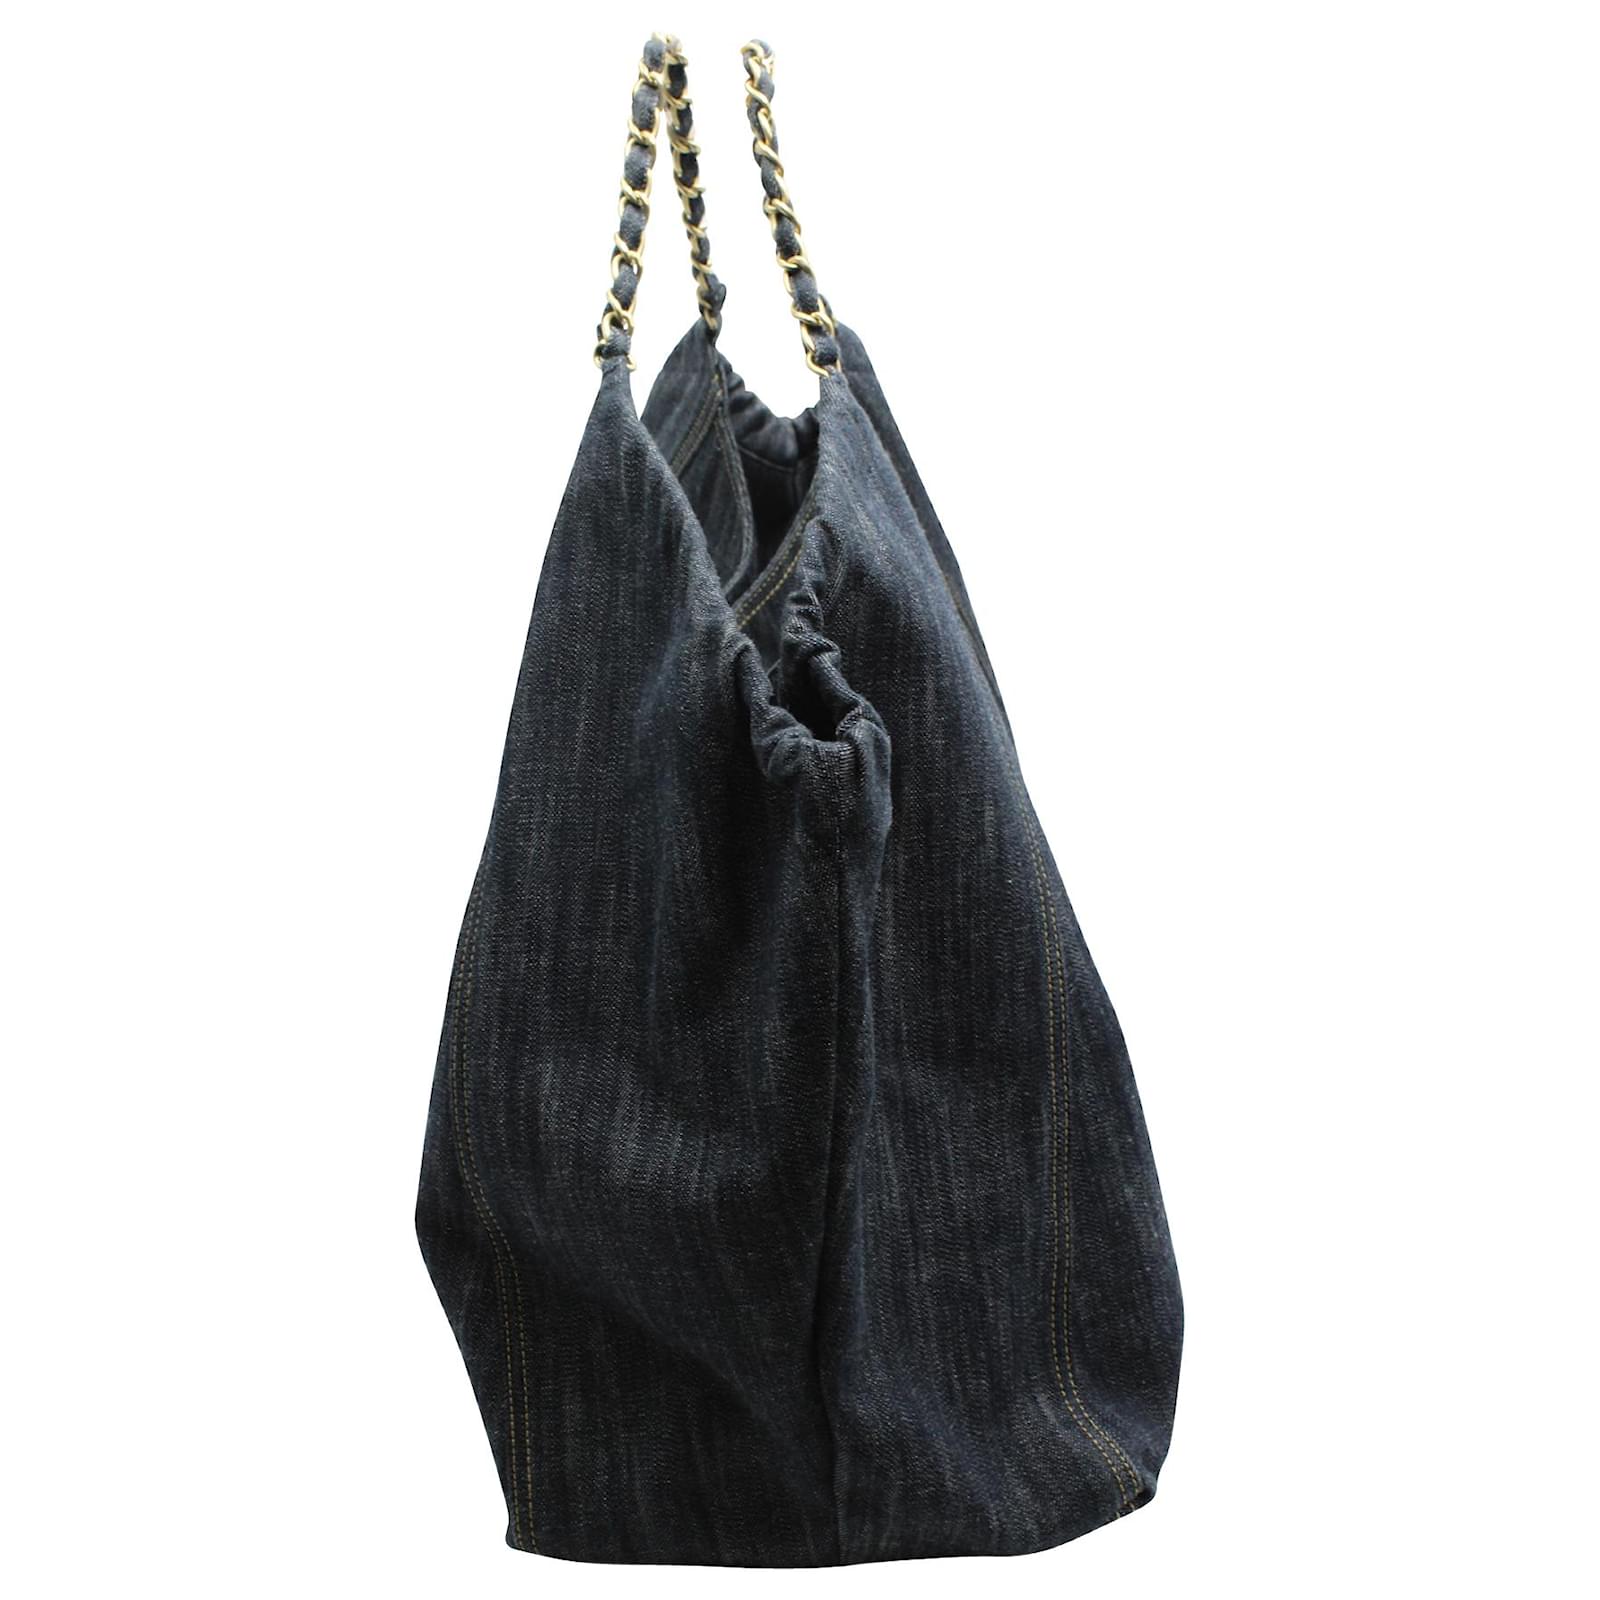 Chanel Coco Cabas Tote Bag in Blue Denim